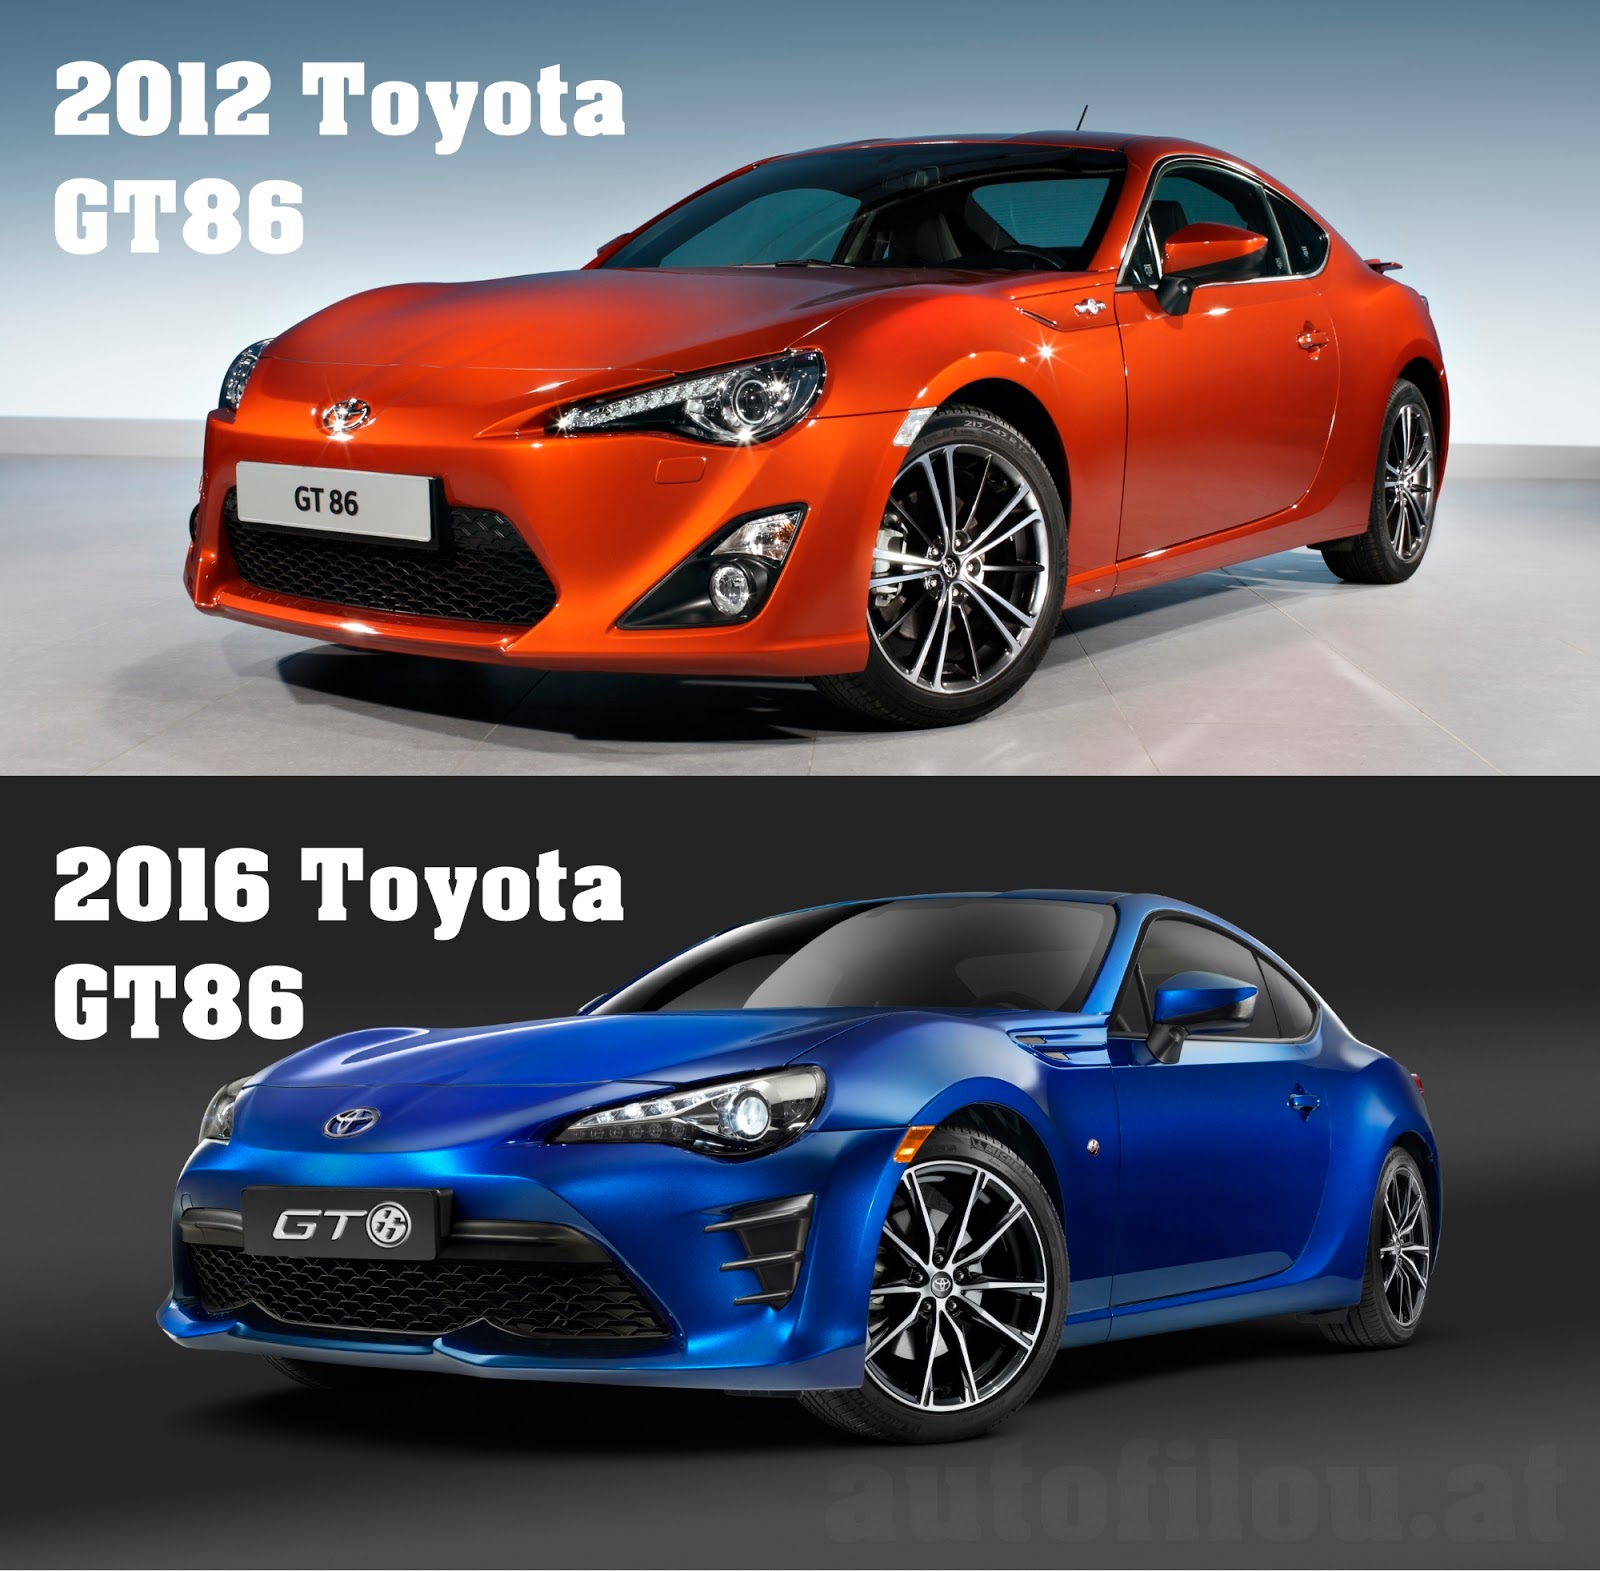 2012-vs-2016-toyota-gt86-vergleich-compare-versus-front-vorne-orange-blue-blau-autofilou-1.jpg